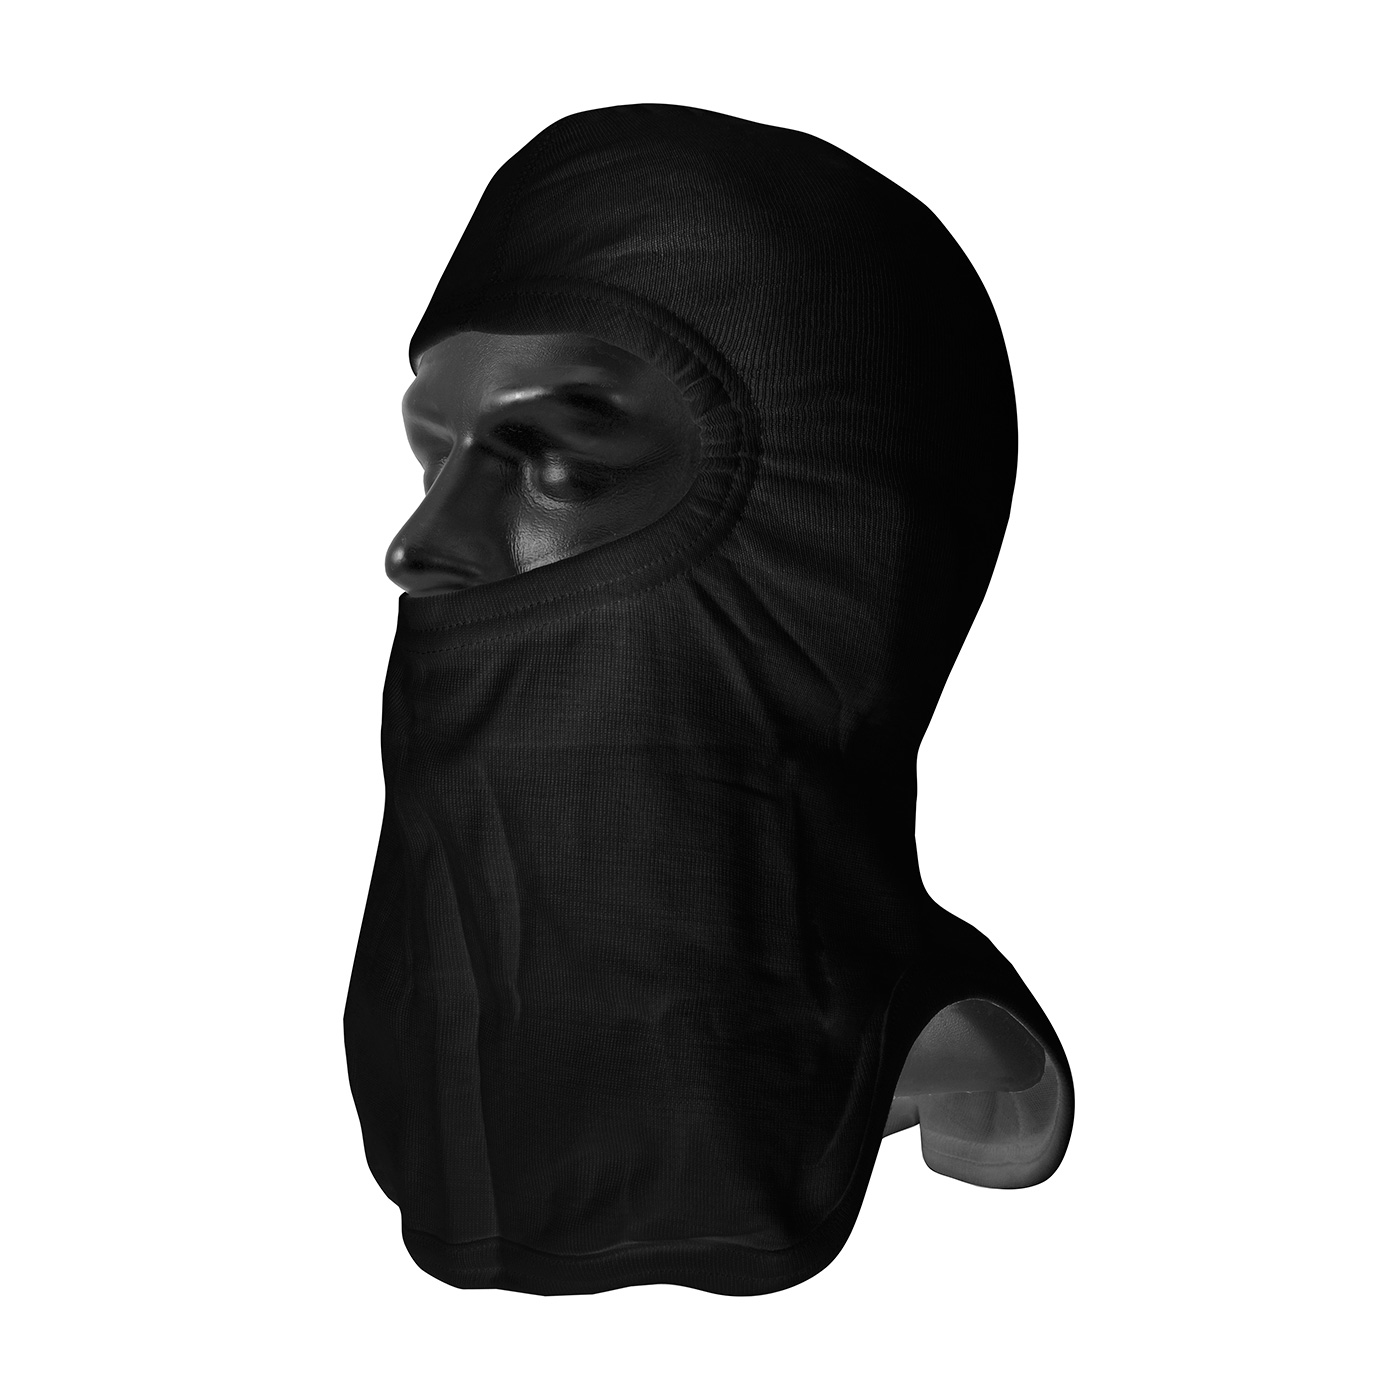 PIP® Black Nomex® / Lenzing FR Hood with Tri-Cut Design - Full Face #906-2080NOL7BLK